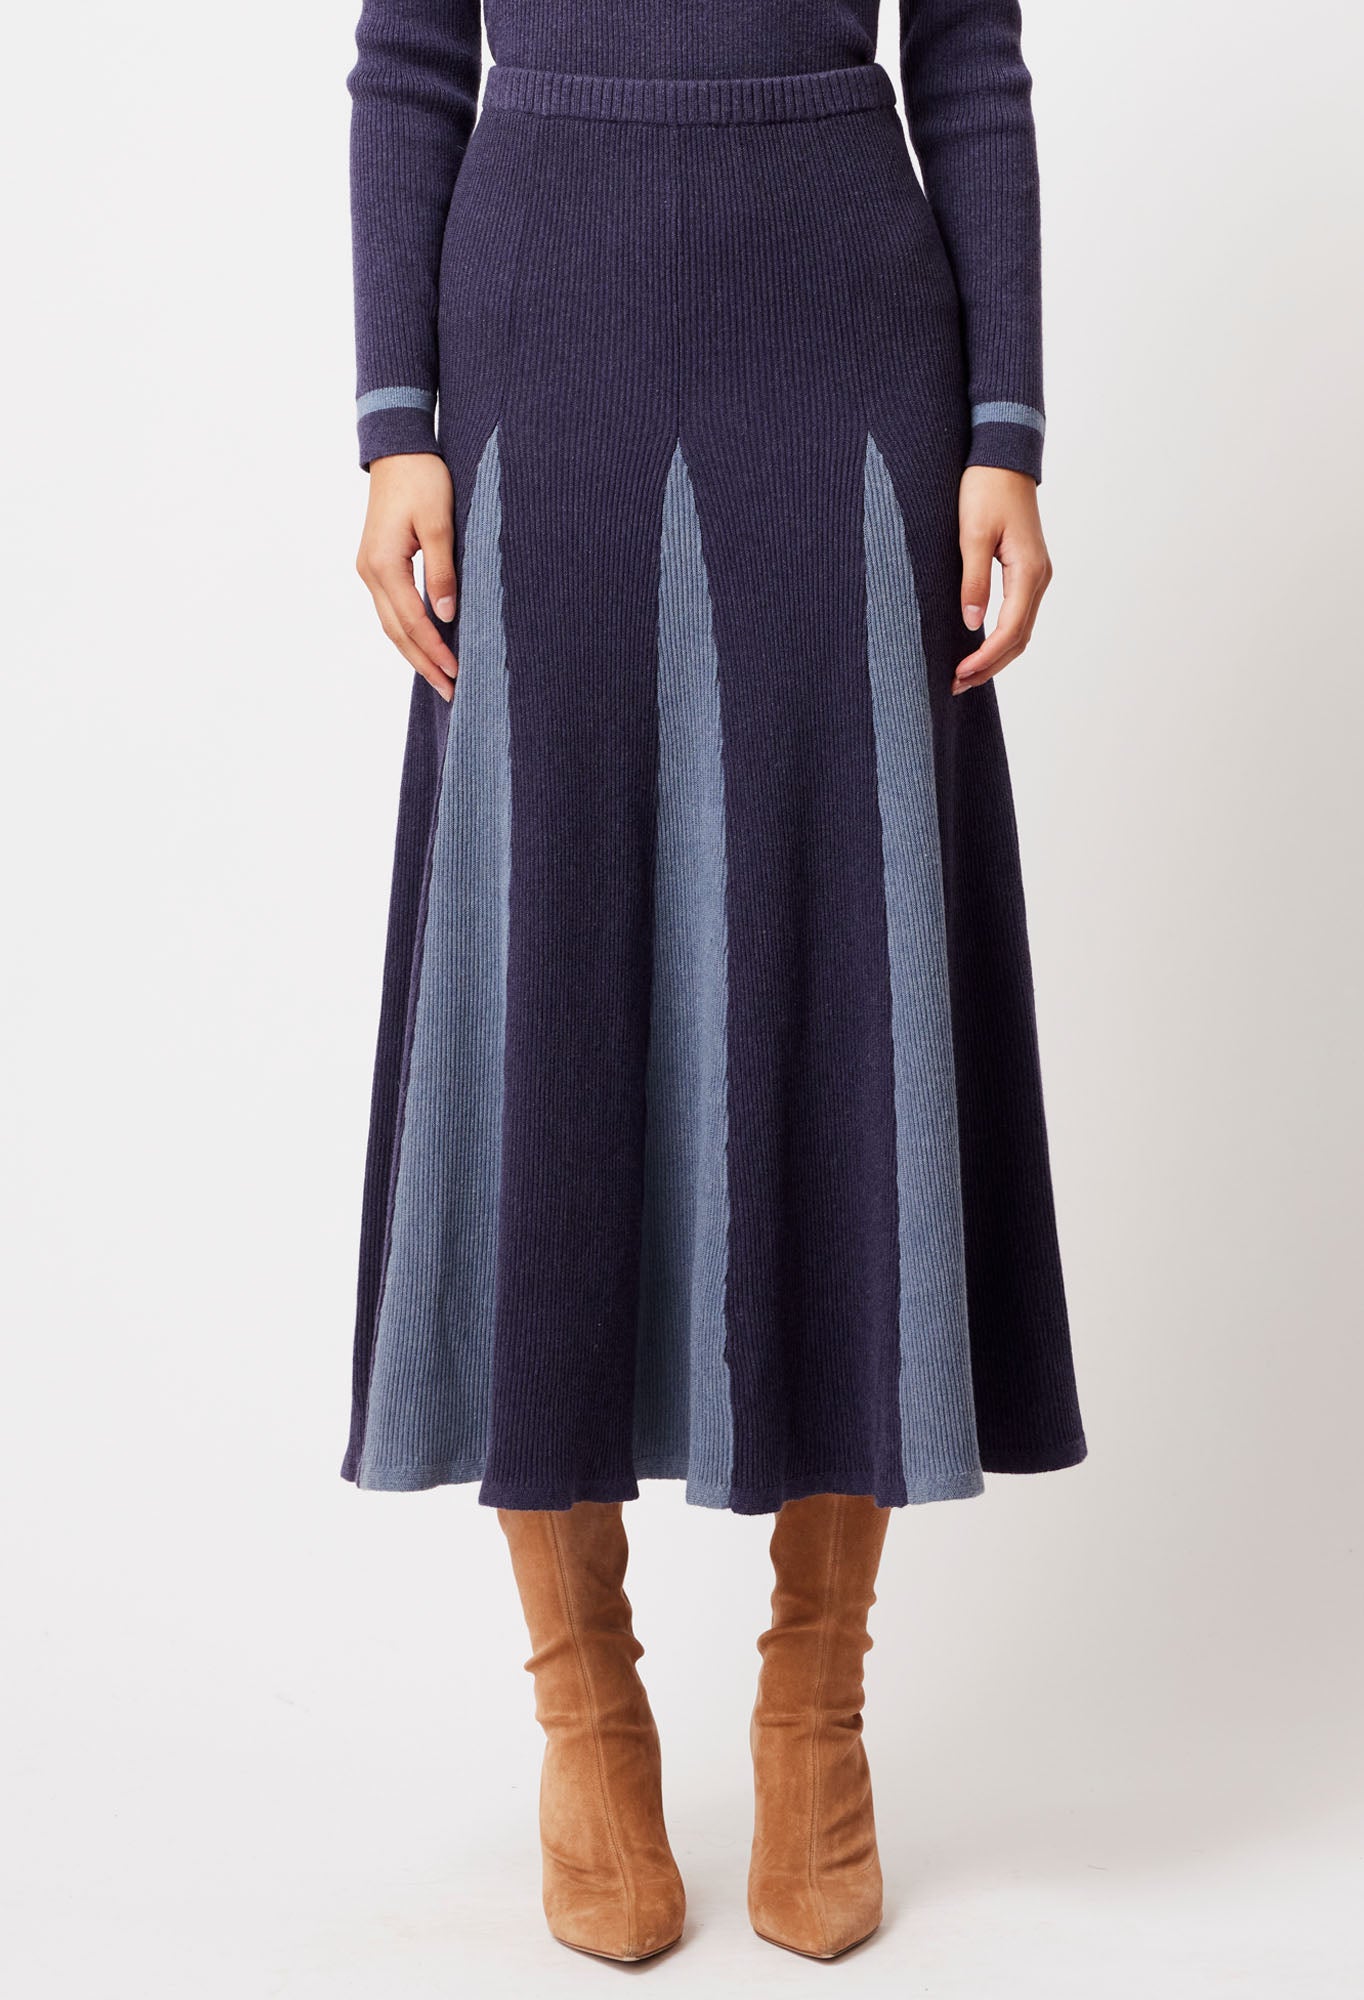 OnceWas Nova Merino Wool Knit Skirt in Ink/Storm